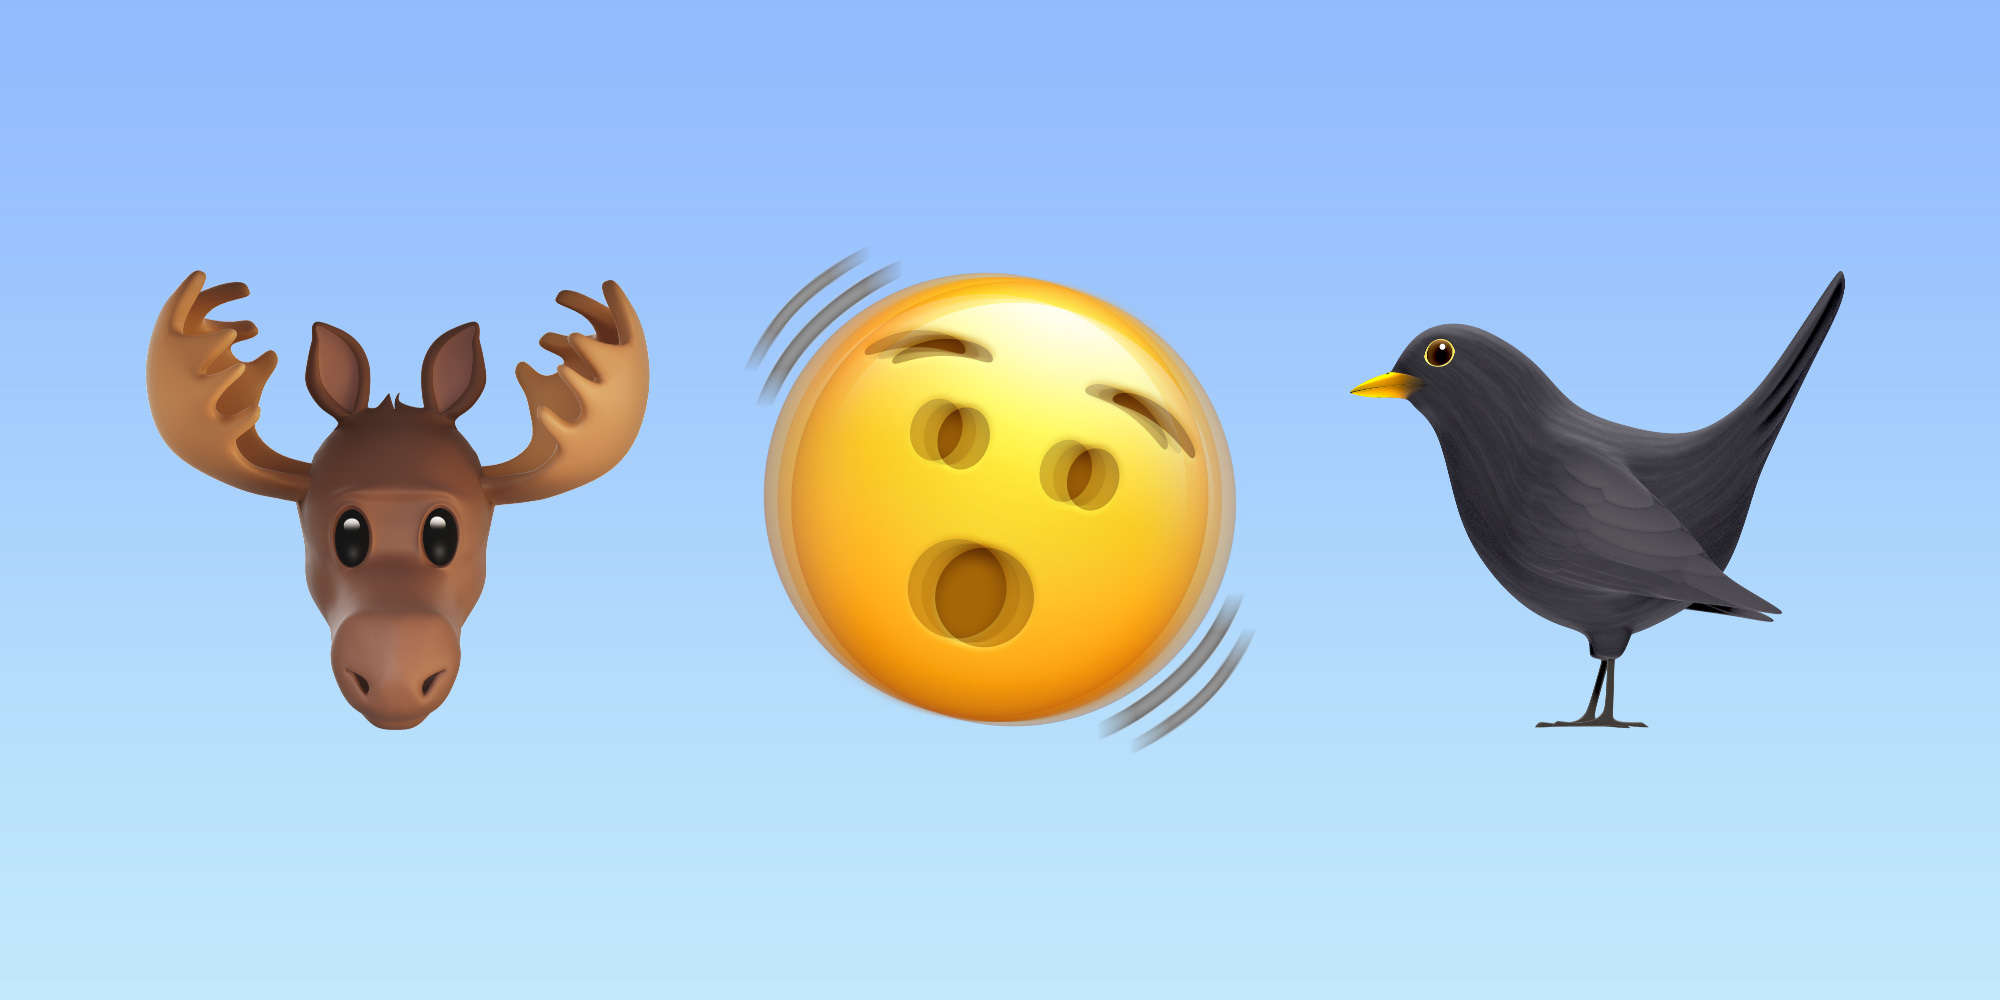 iOS  and iPadOS  add new Emoji for iPhone and iPad